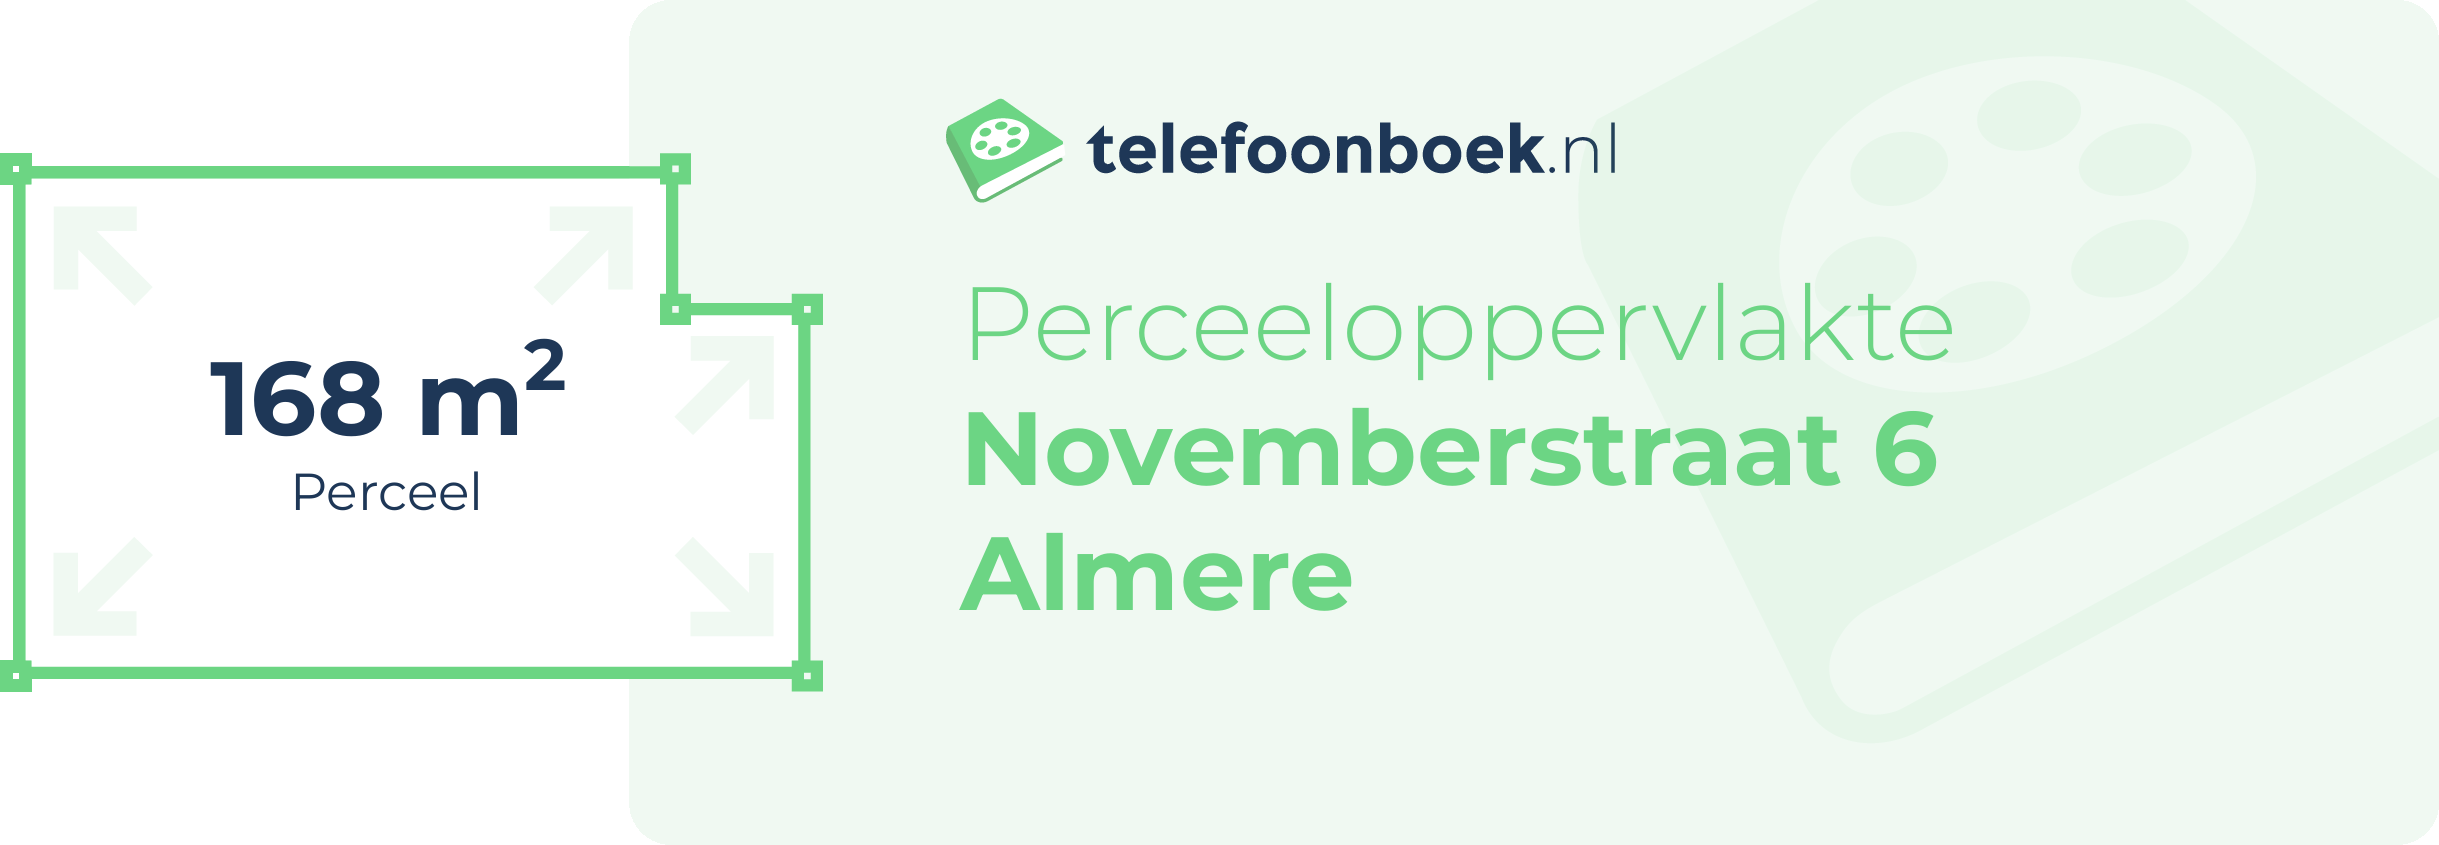 Perceeloppervlakte Novemberstraat 6 Almere